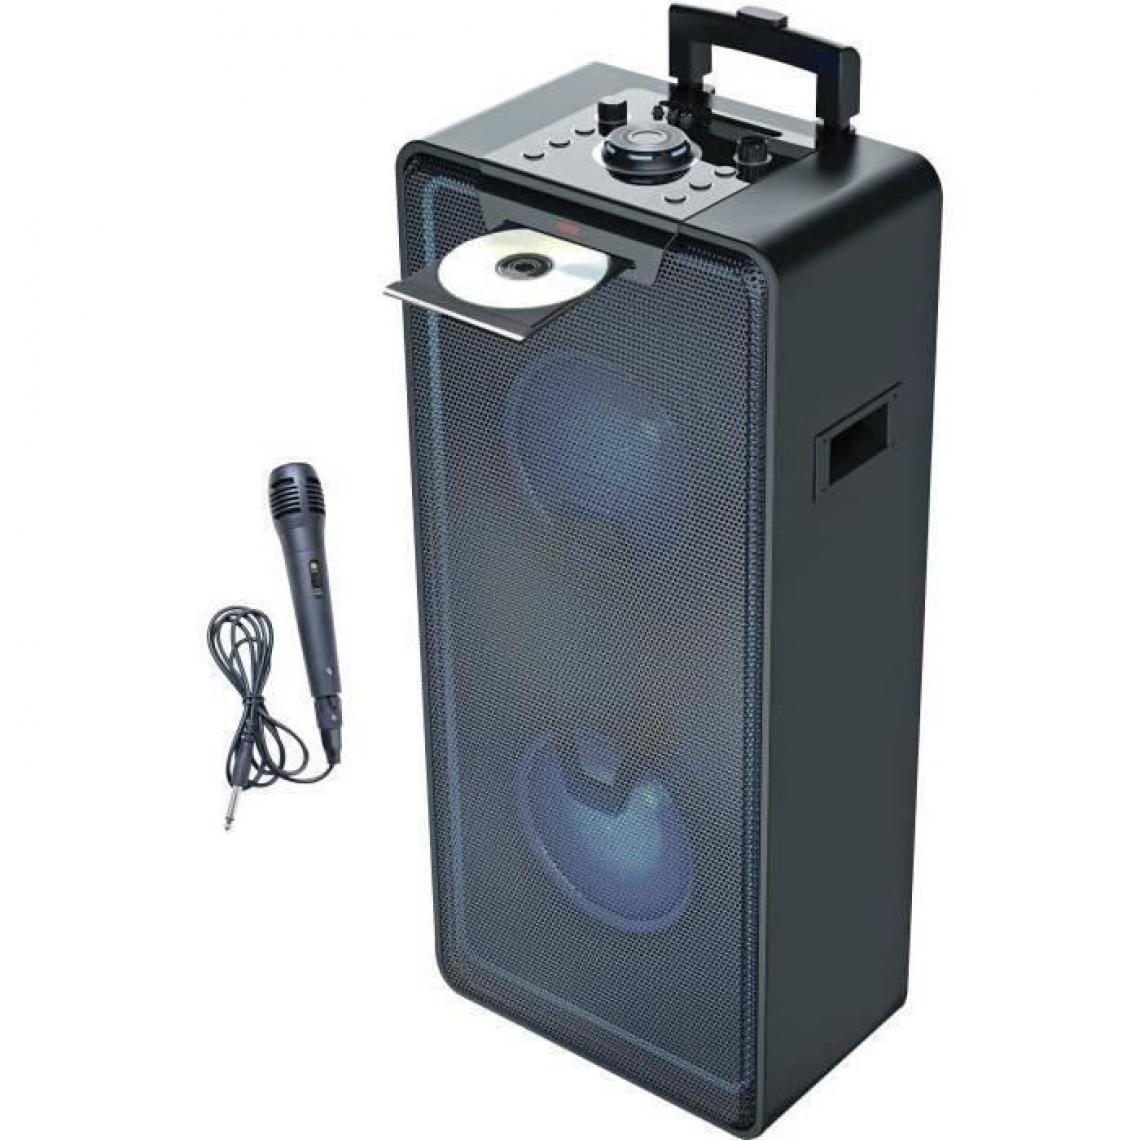 Inovalley - MS04XXL - Systeme Audio High Power - 1000 Watts - Lecteur CD/MP3 - Bluetooth - Lumieres LED - USB - 2 entrées Micro - Chaînes Hifi